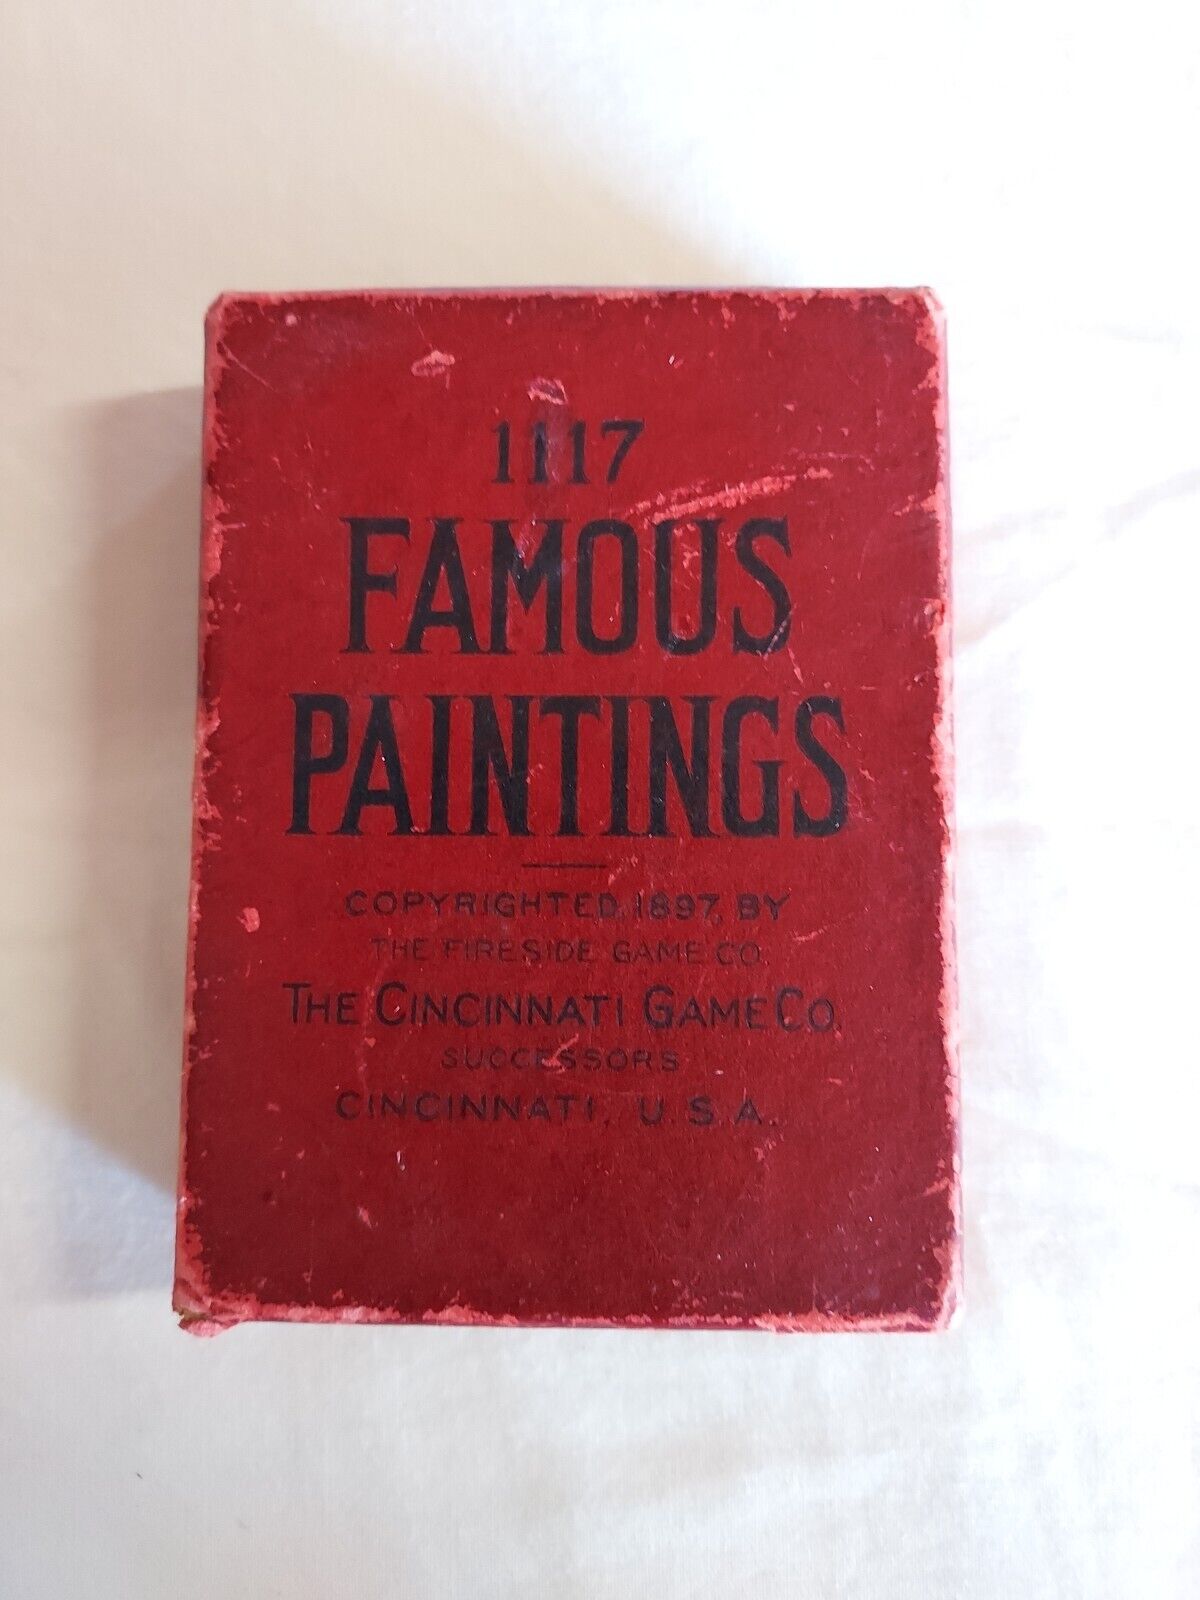 1897 Famous Paintings The Cincinnati Card Game Co #1117